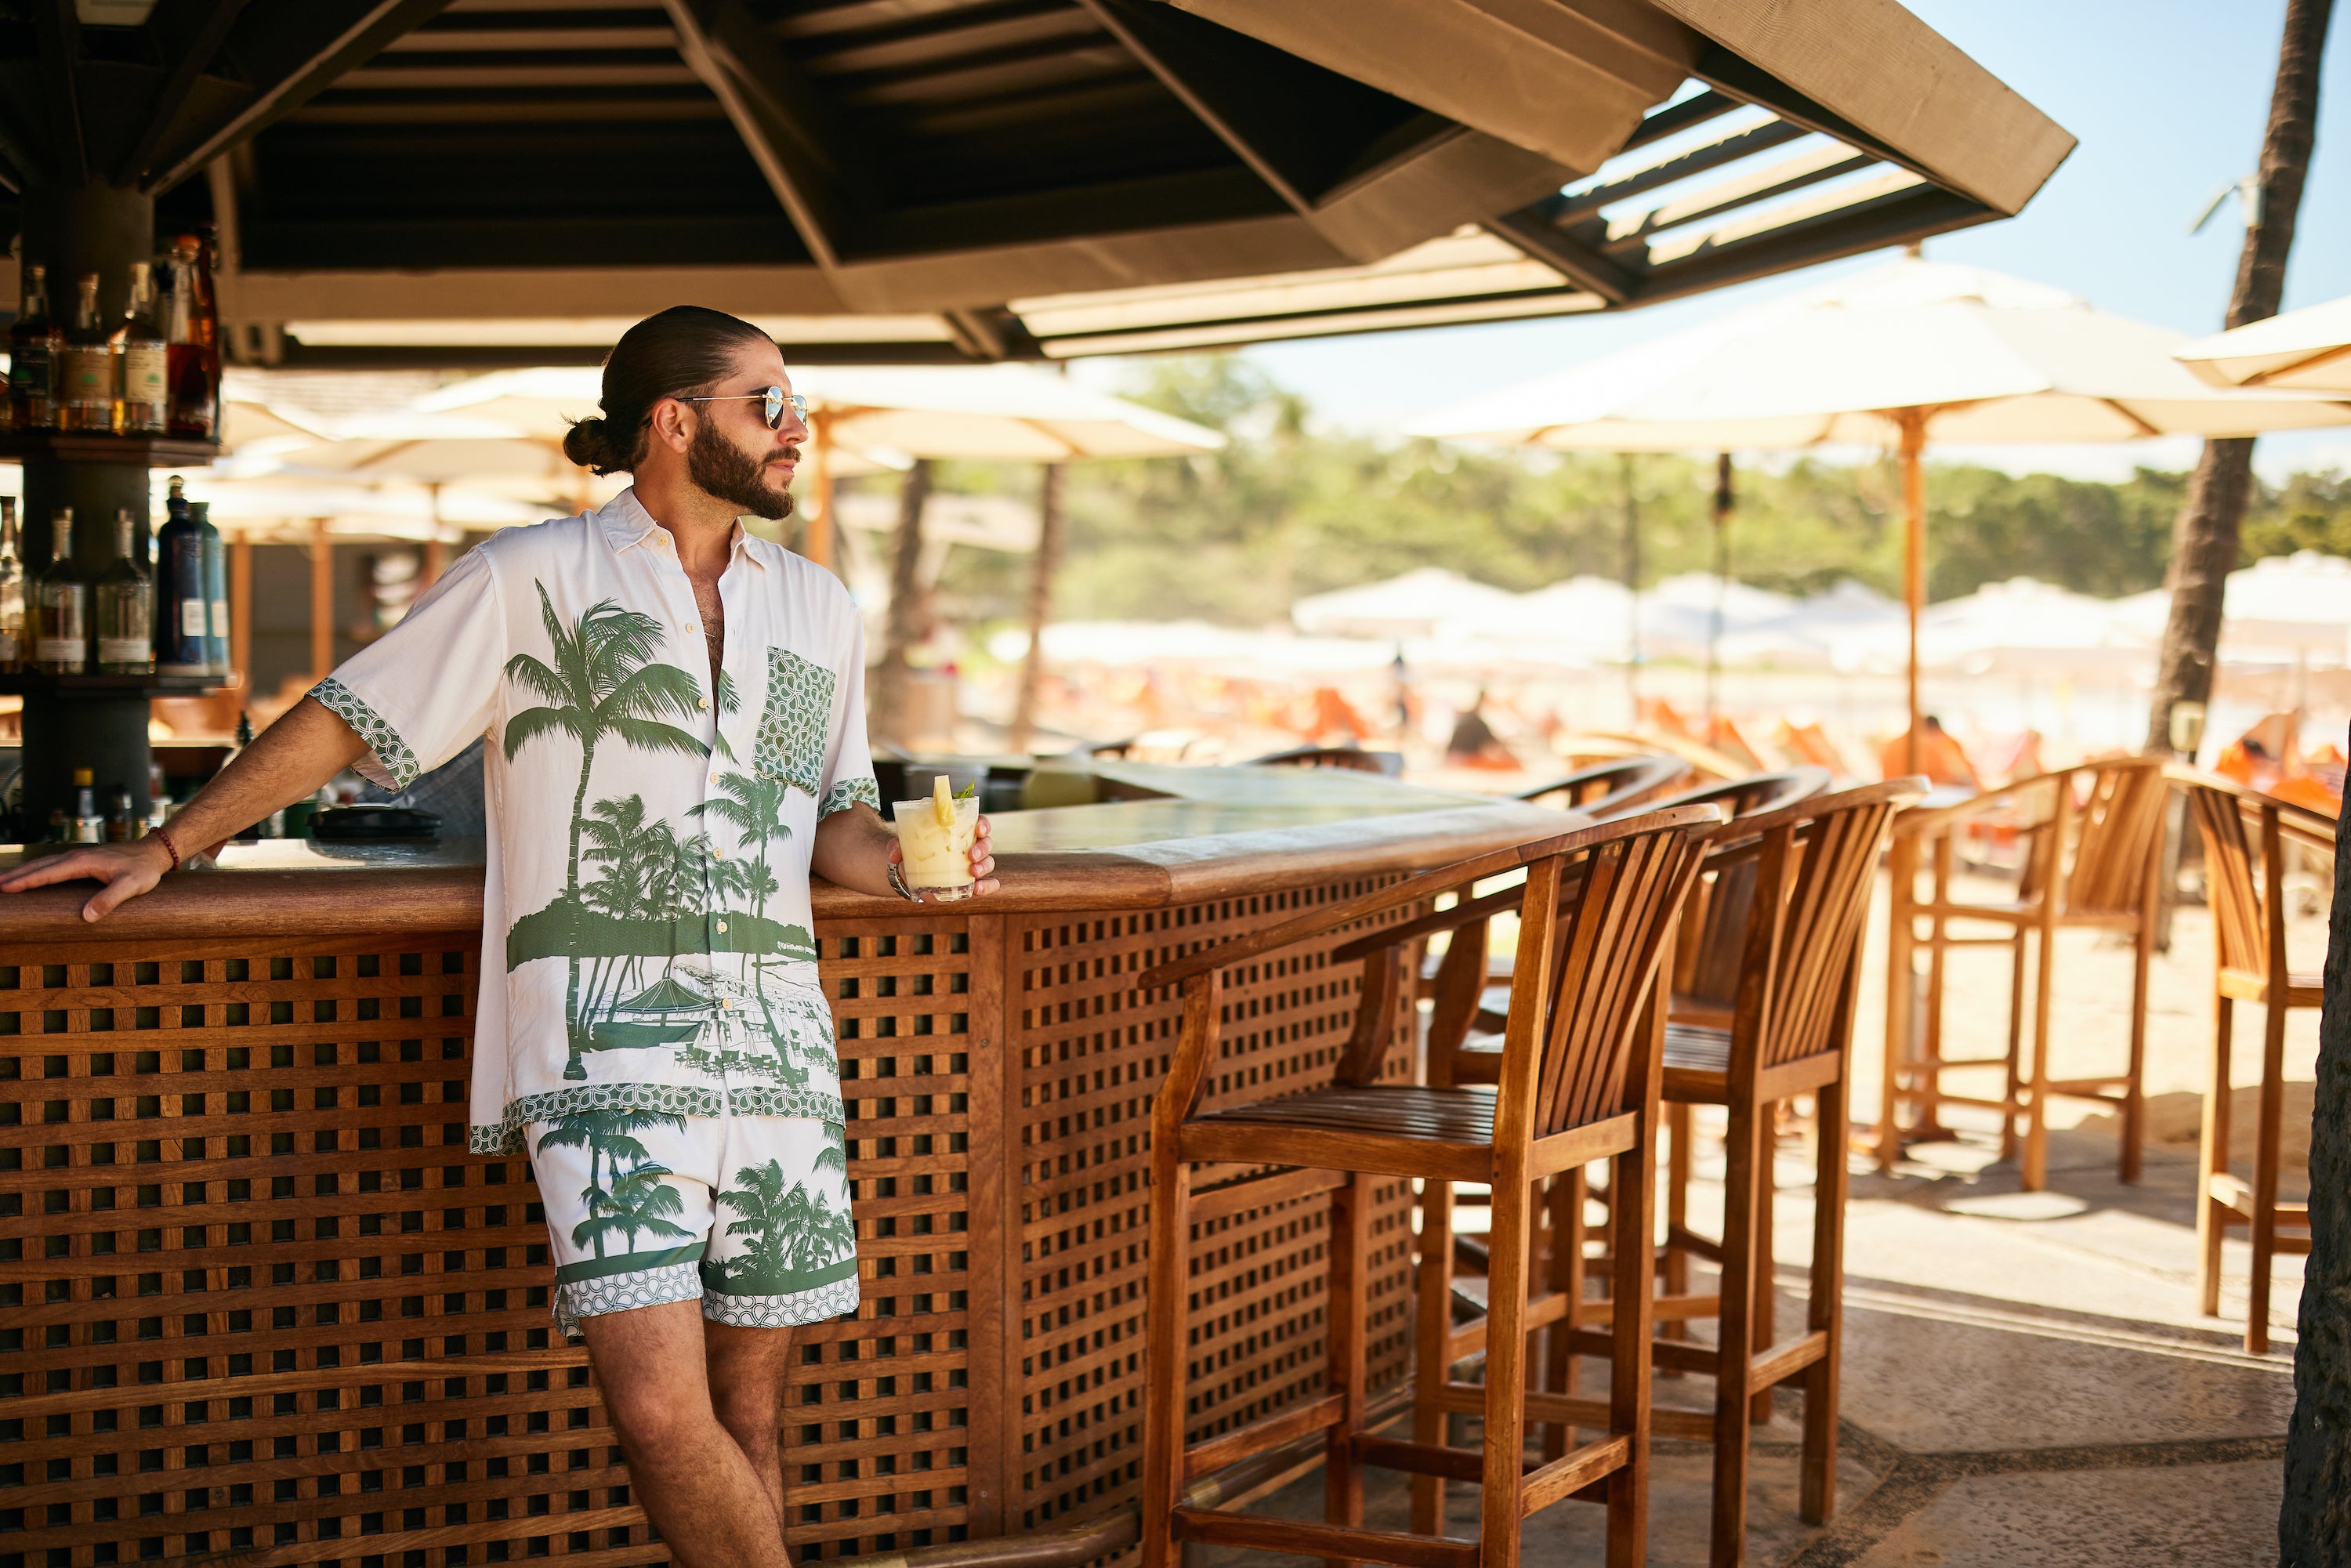 Mens Short Sleeve Palm Tree Hawaii Shirts Summer Beach Floral T Shirt Beach  Tops